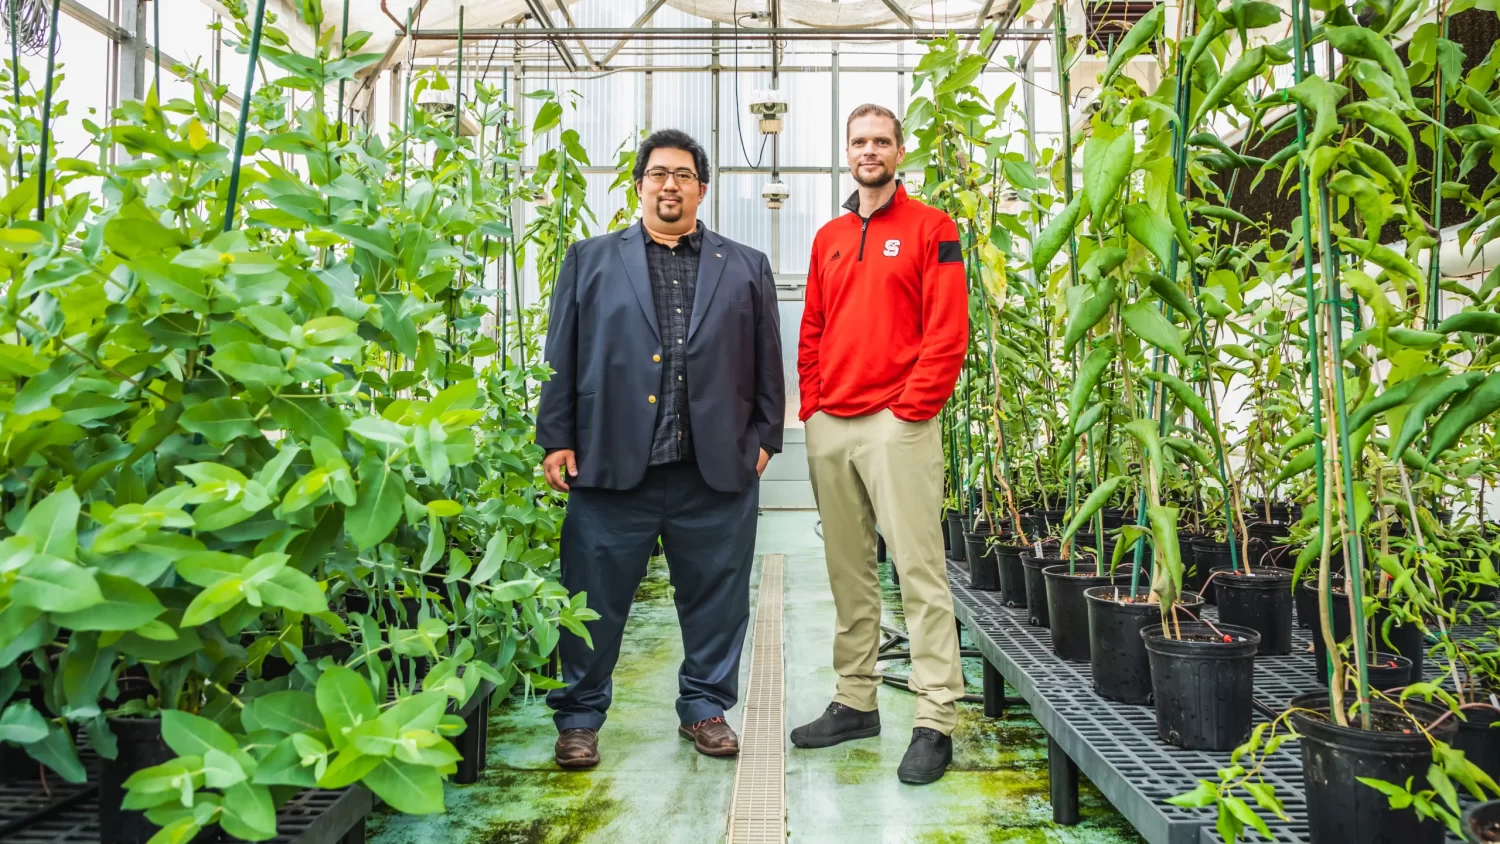 Jack Wang and Rodolphe Barrangou in Greenhouse